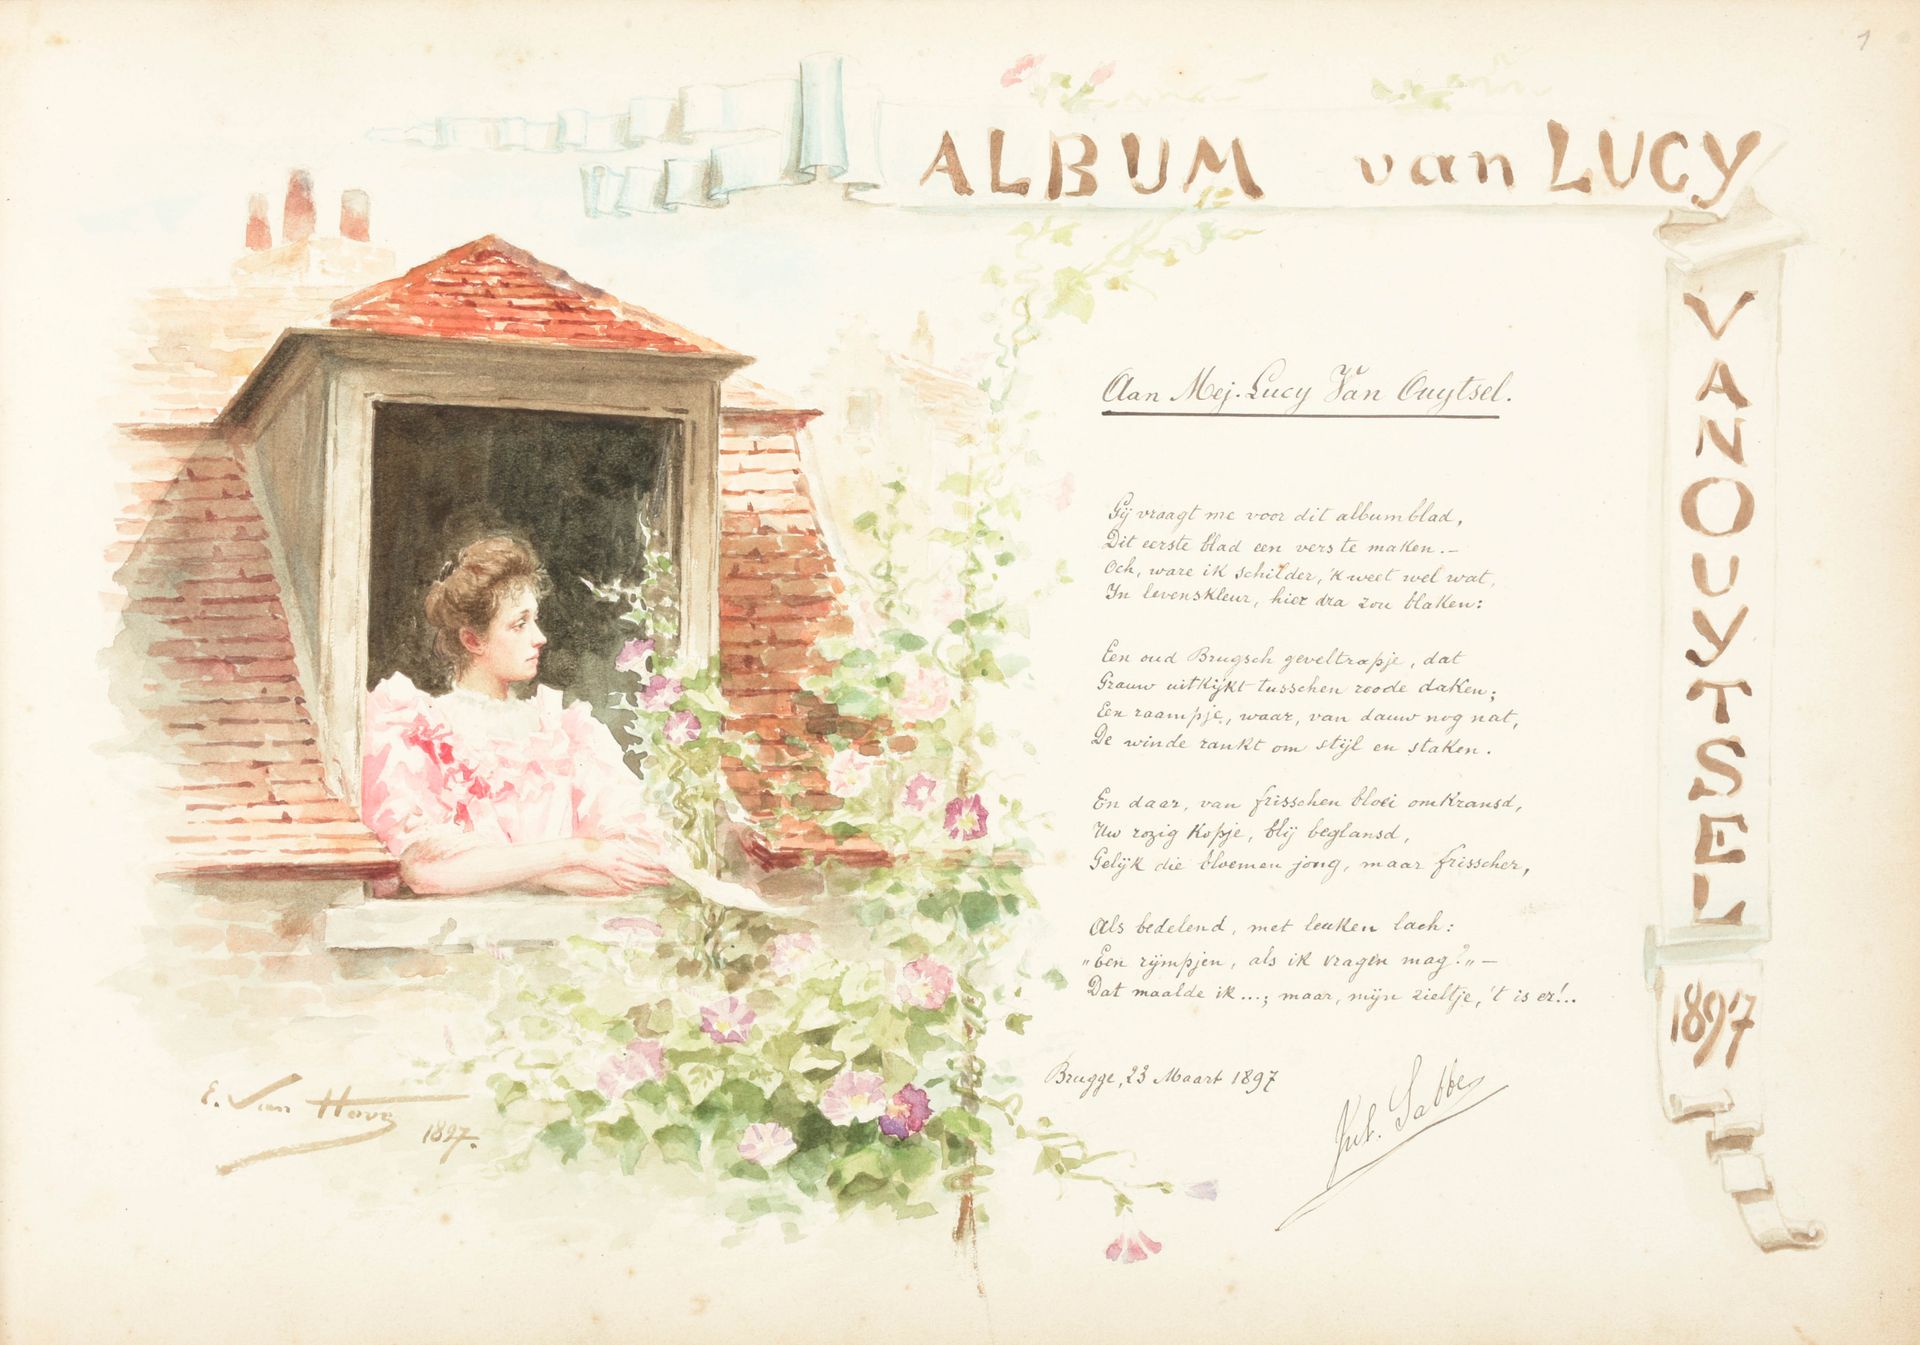 [LIBER AMICORUM] Album van Lucy Vanouytsel, 1897

Oblong folio (27 x 38.5 cm) wi&hellip;